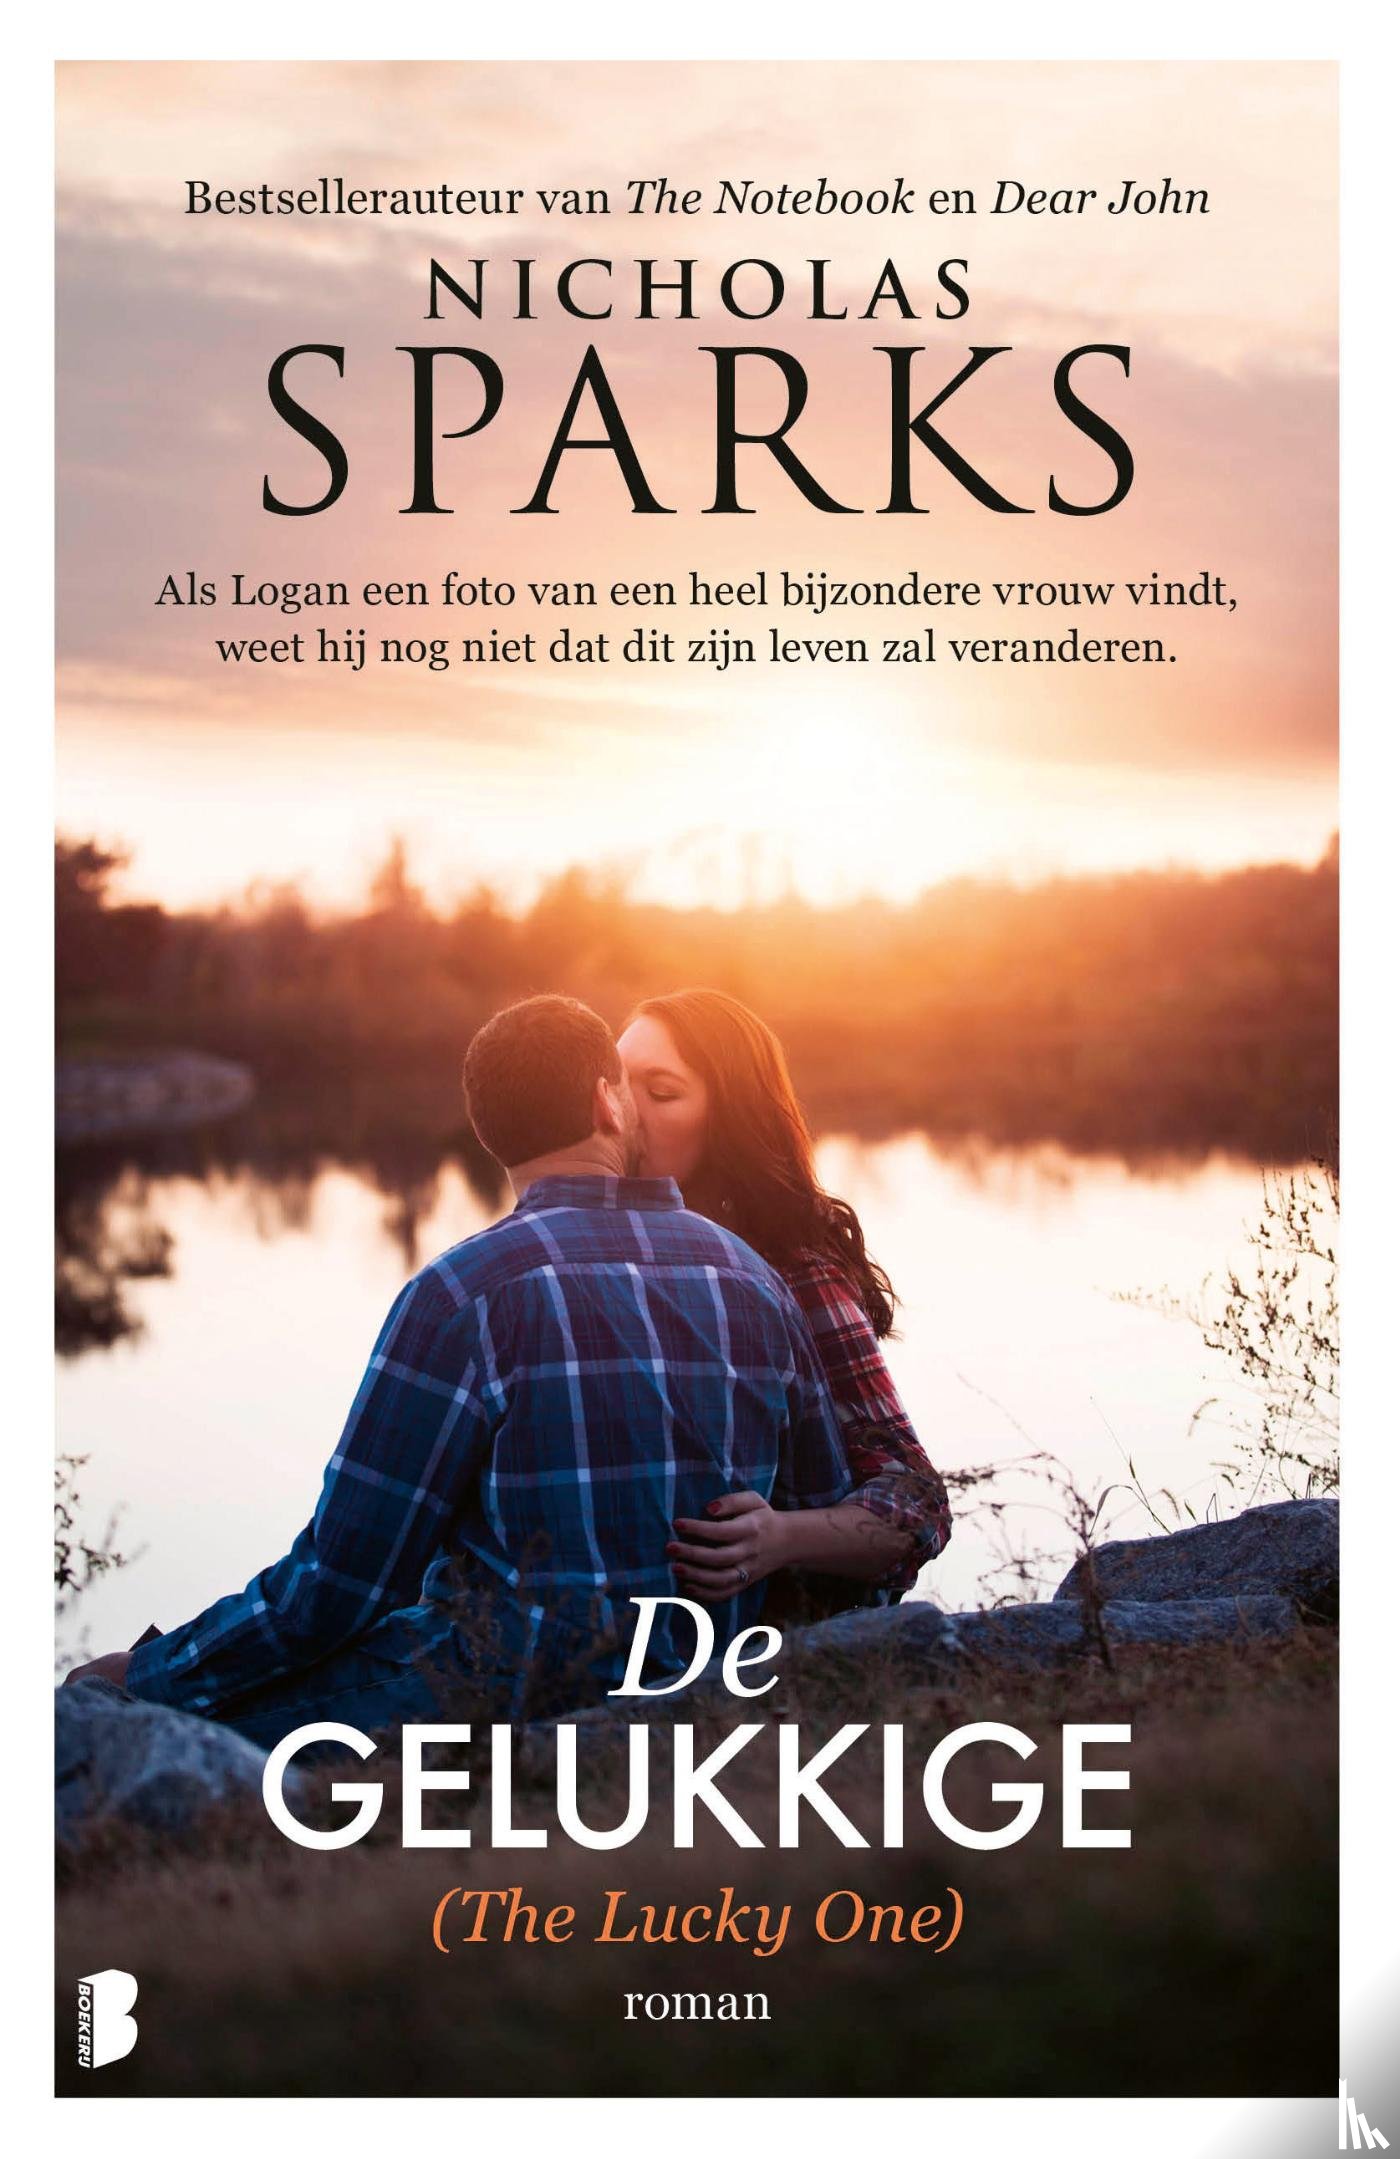 Sparks, Nicholas - De gelukkige (The Lucky One)